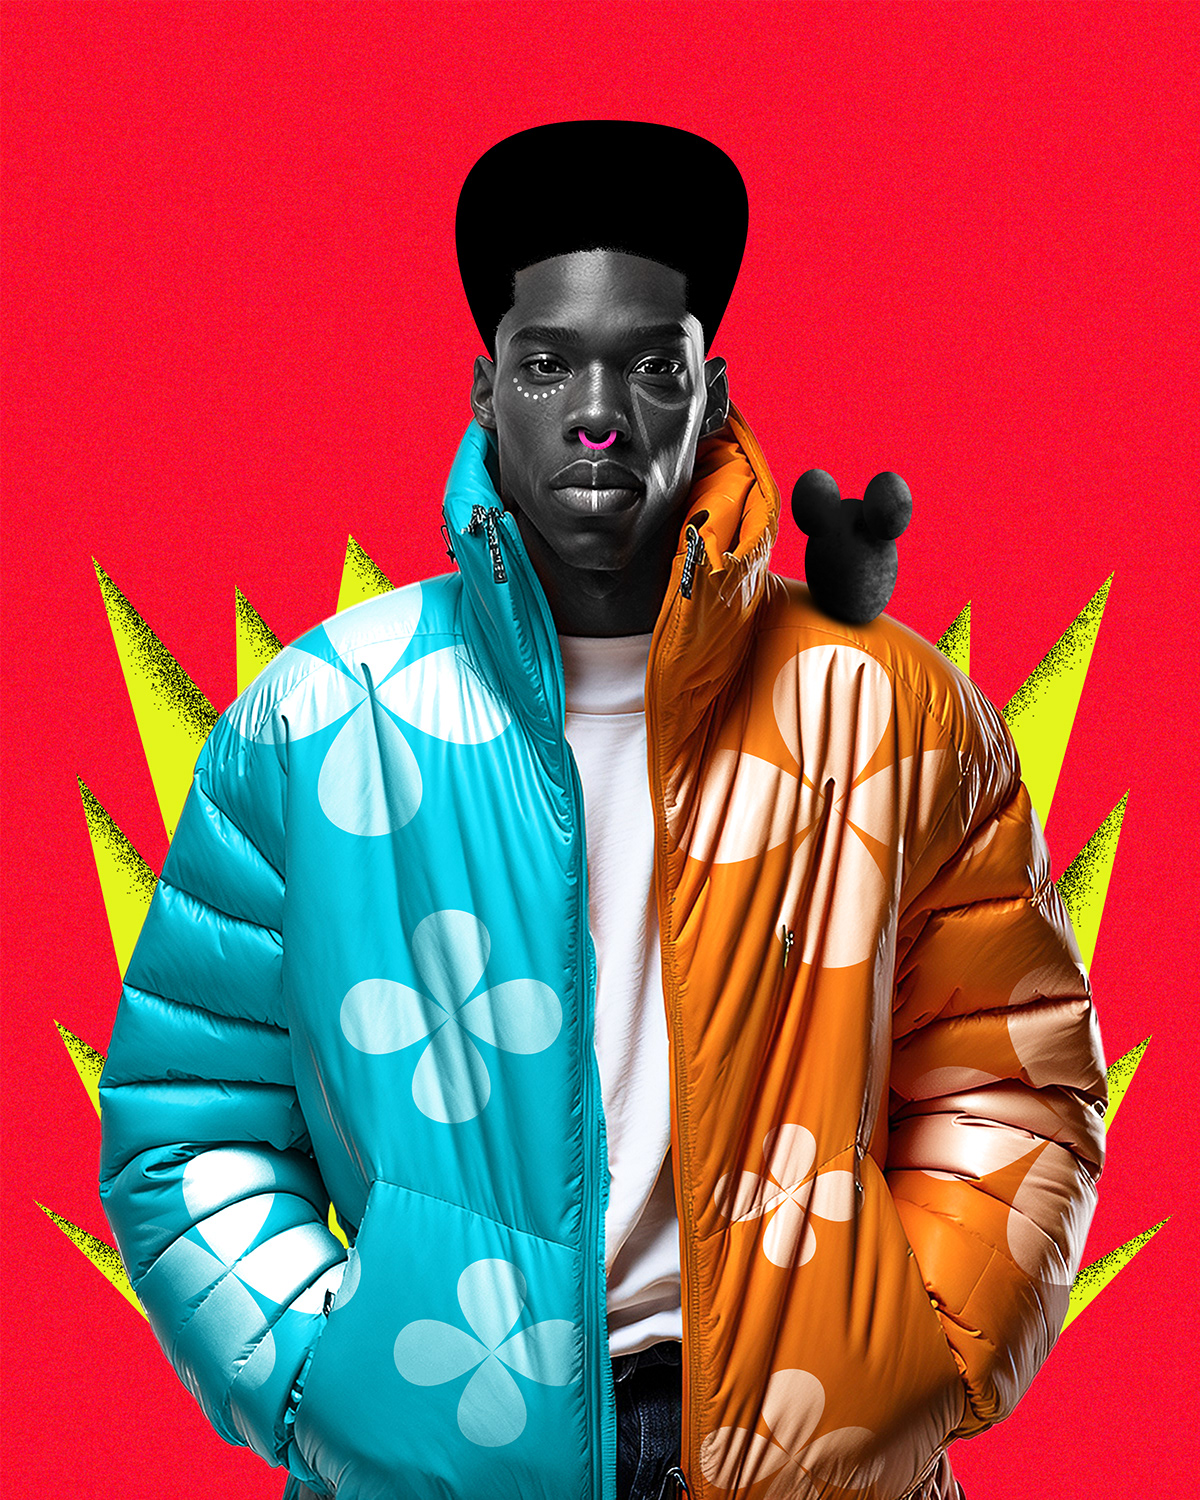 Colourful  PhotoshopArt digitalart ILLUSTRATION  portrait abstract afrofuturism